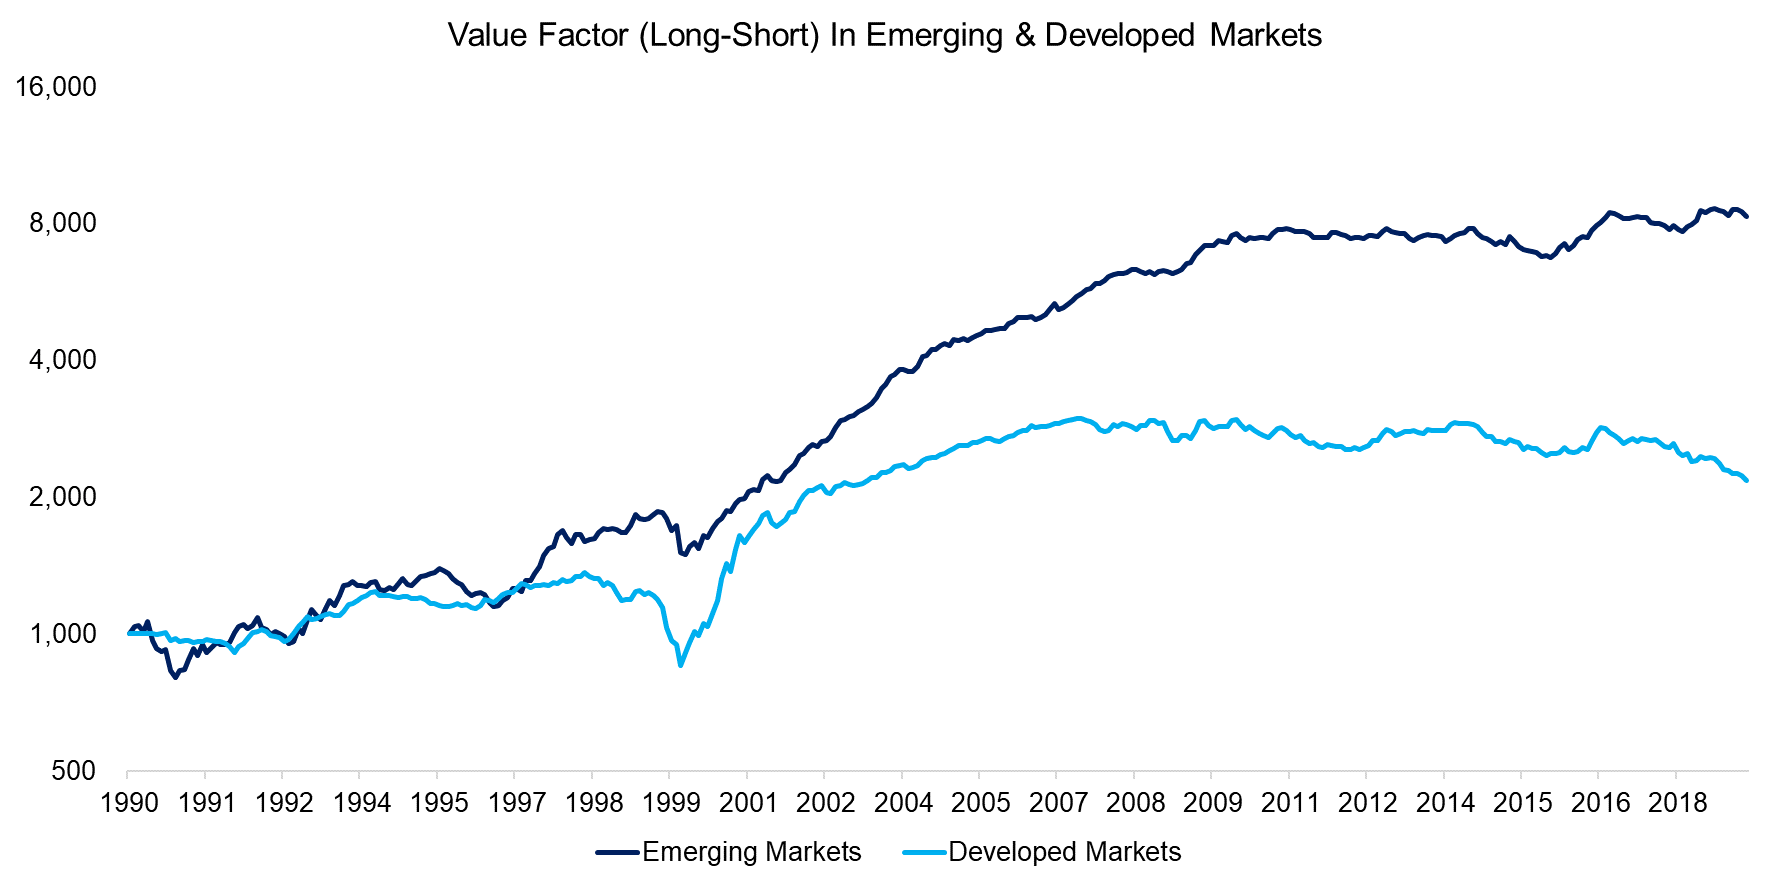 Value Factor (Long-Short) In Emerging & Developed Markets